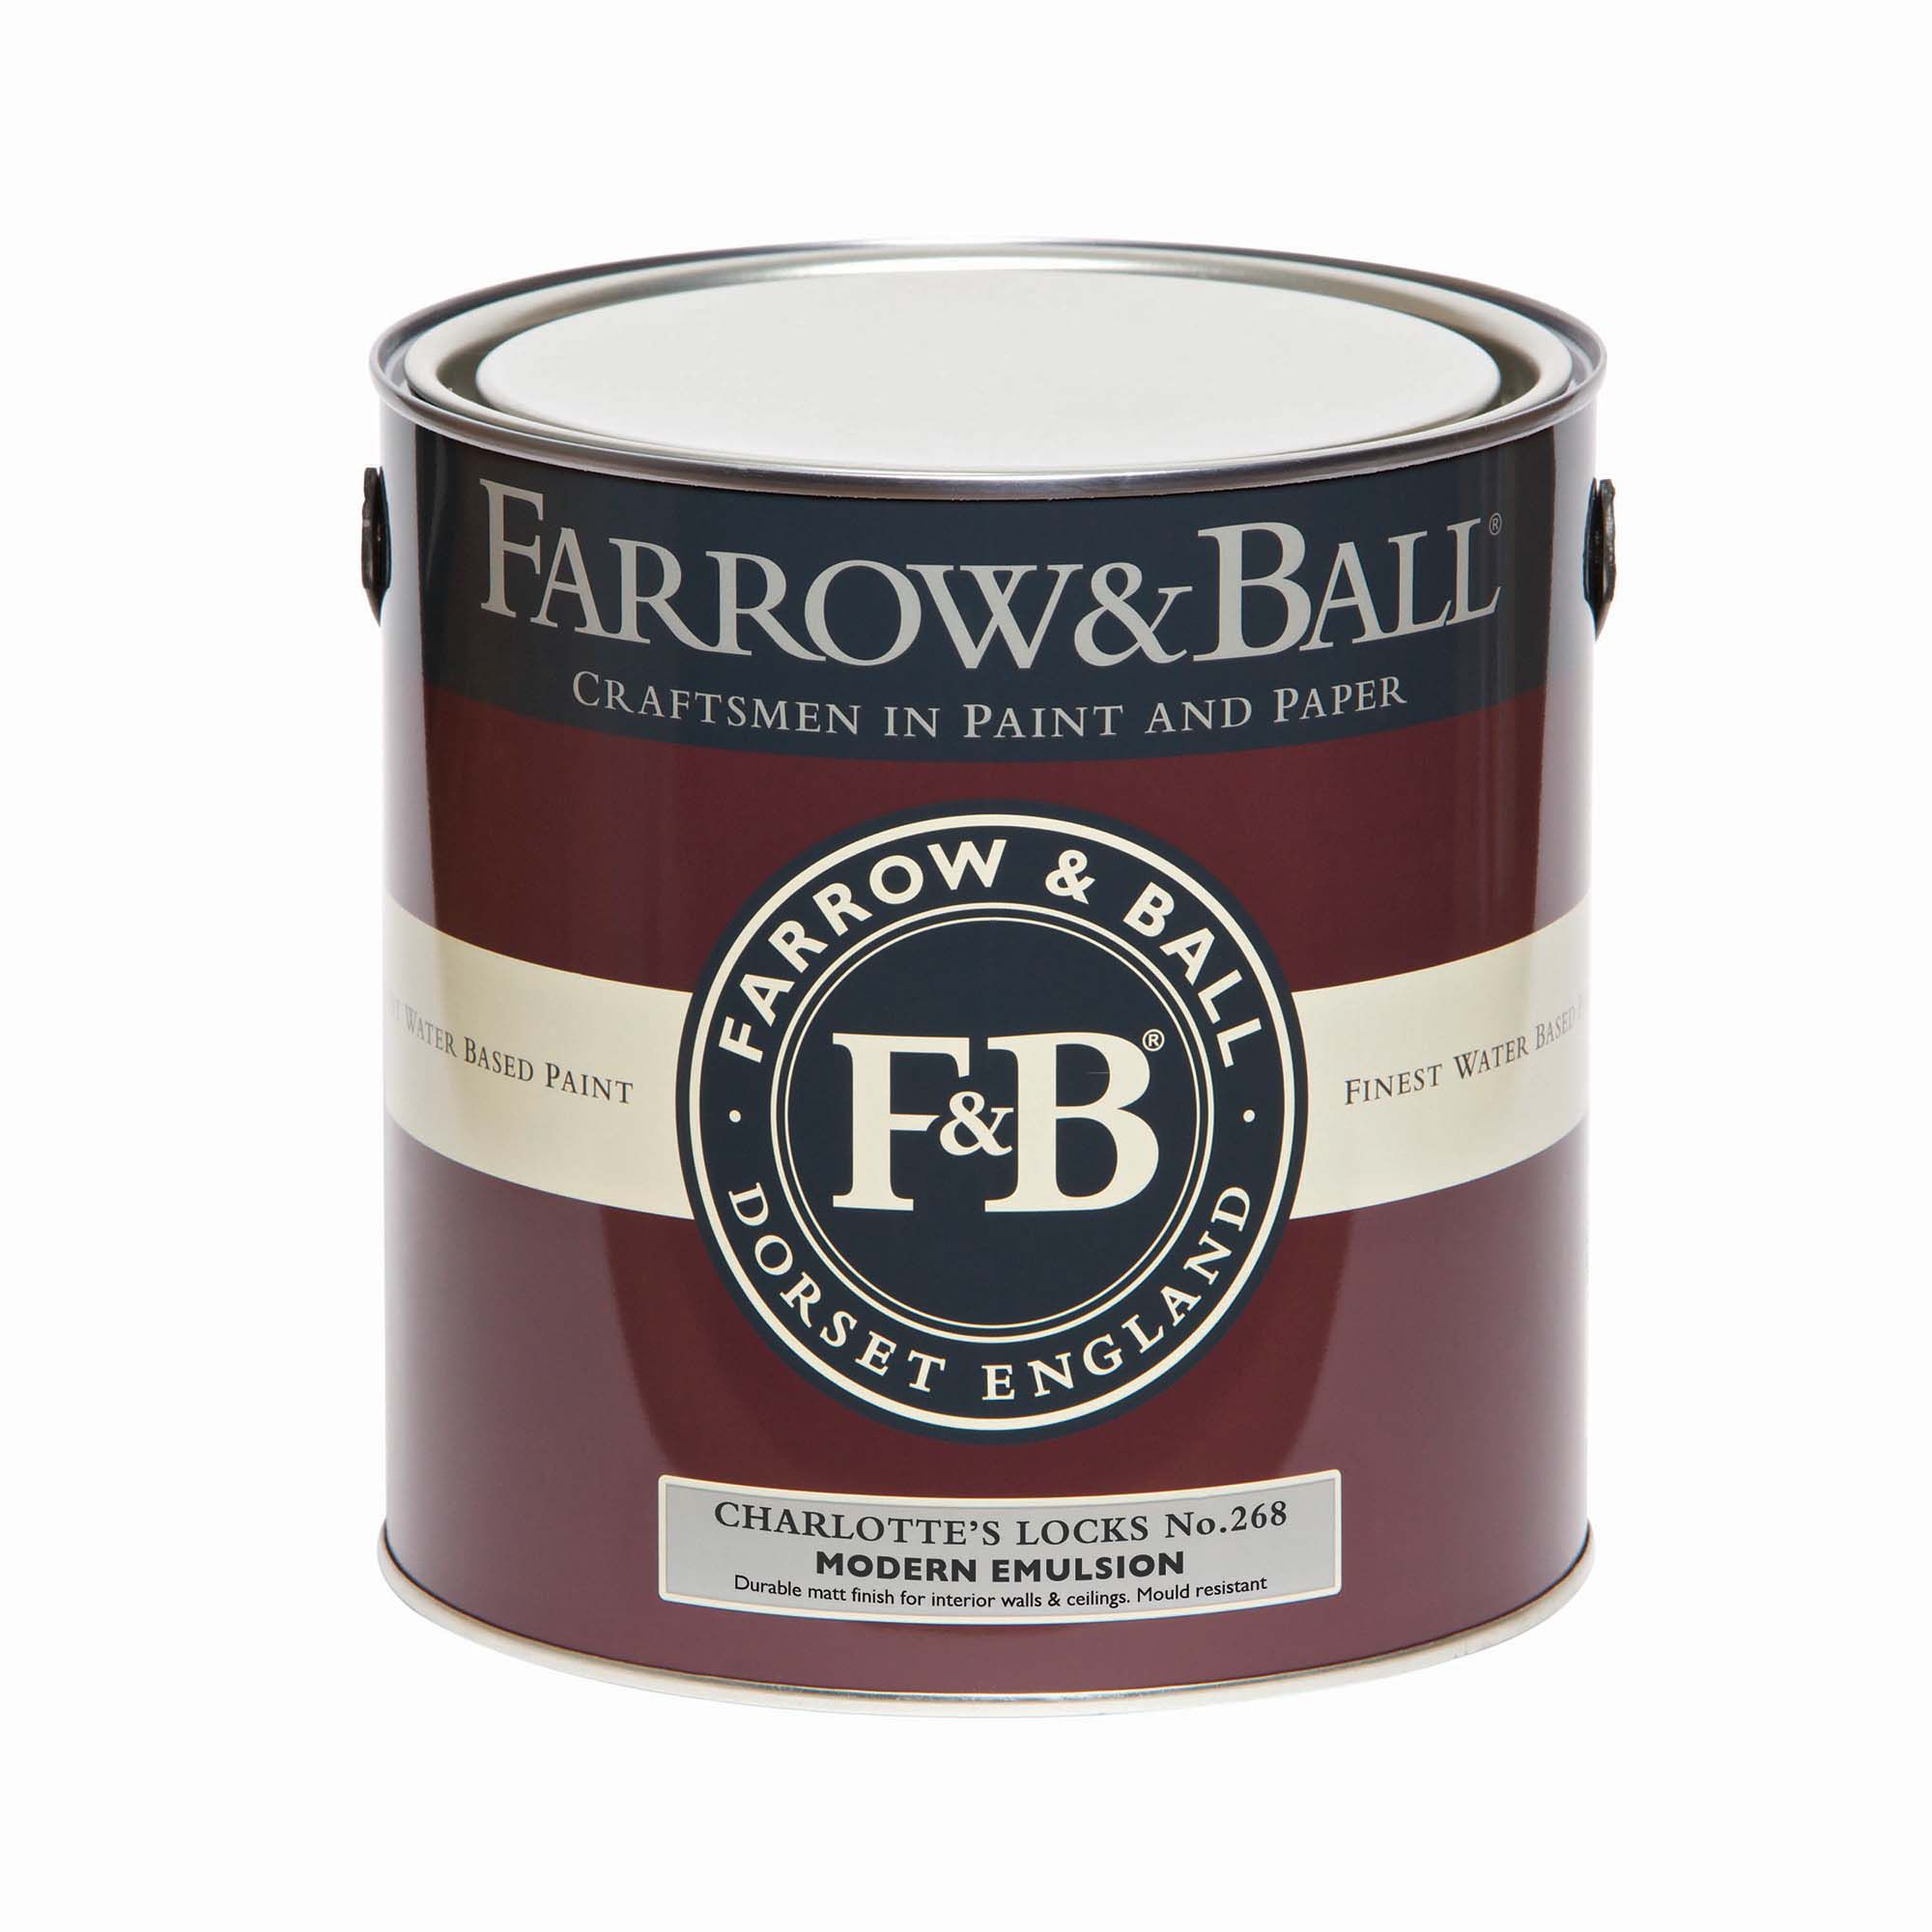 Farrow & Ball Modern Charlotte's Locks No.268 Matt Emulsion paint, 2.5L